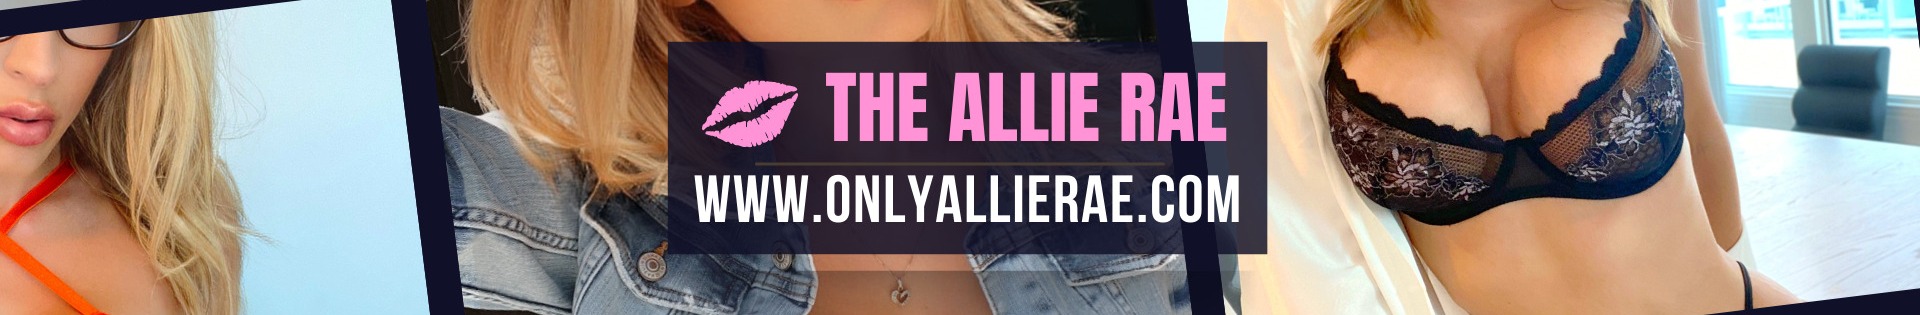 The Allie Rae - profile image